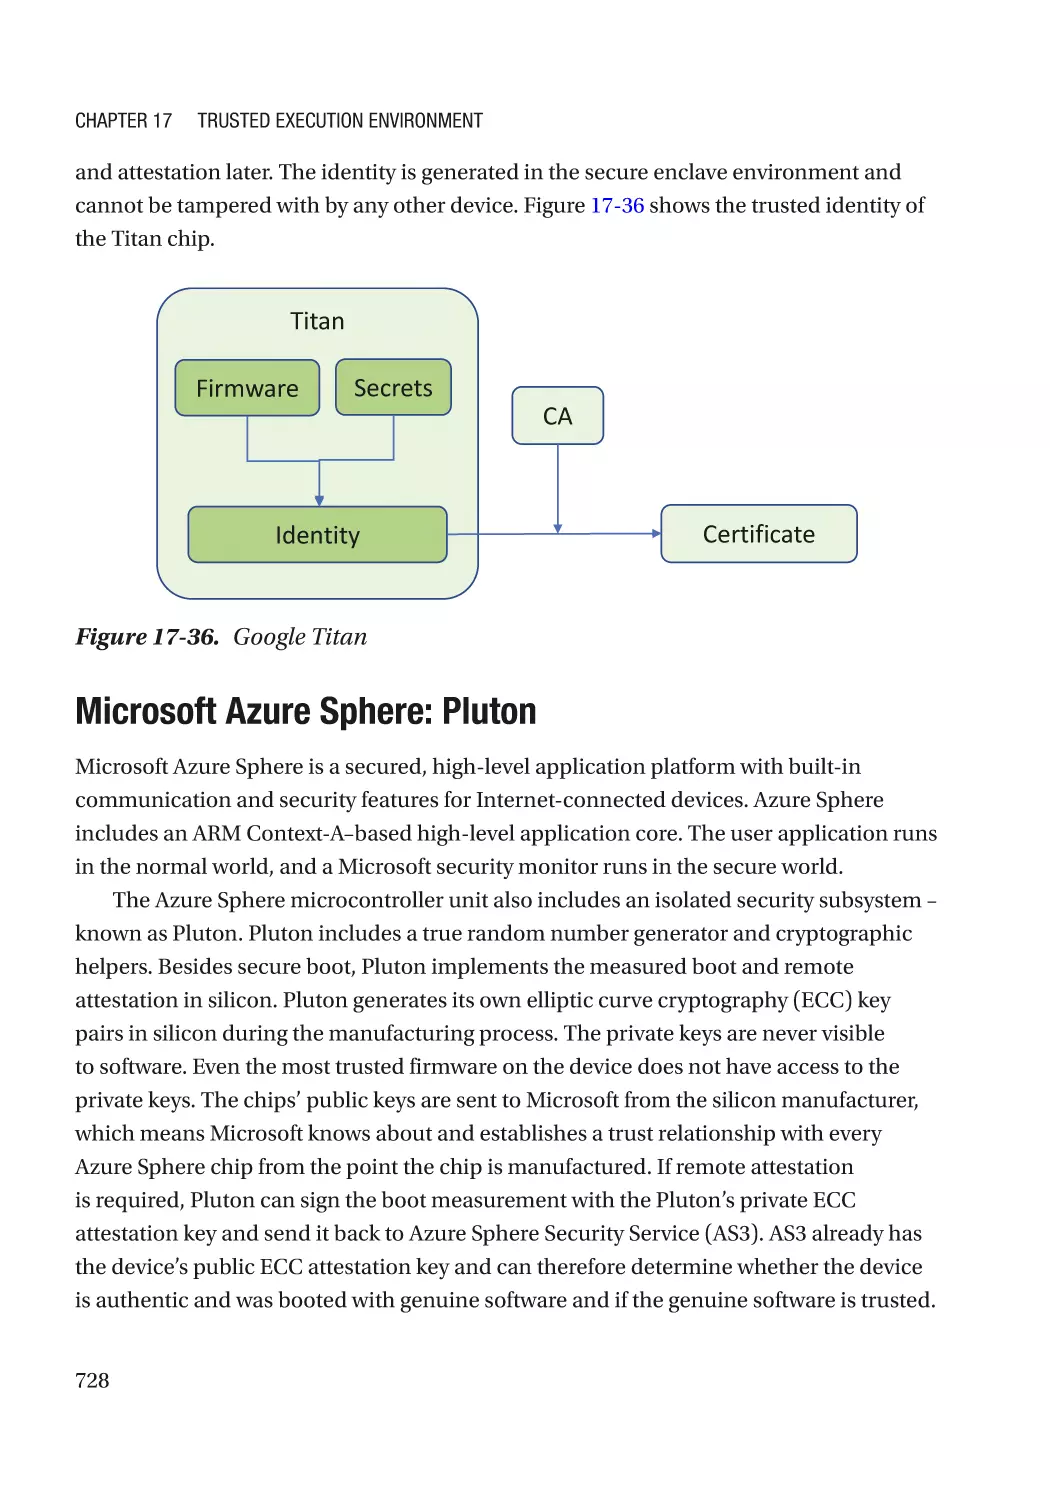 Microsoft Azure Sphere